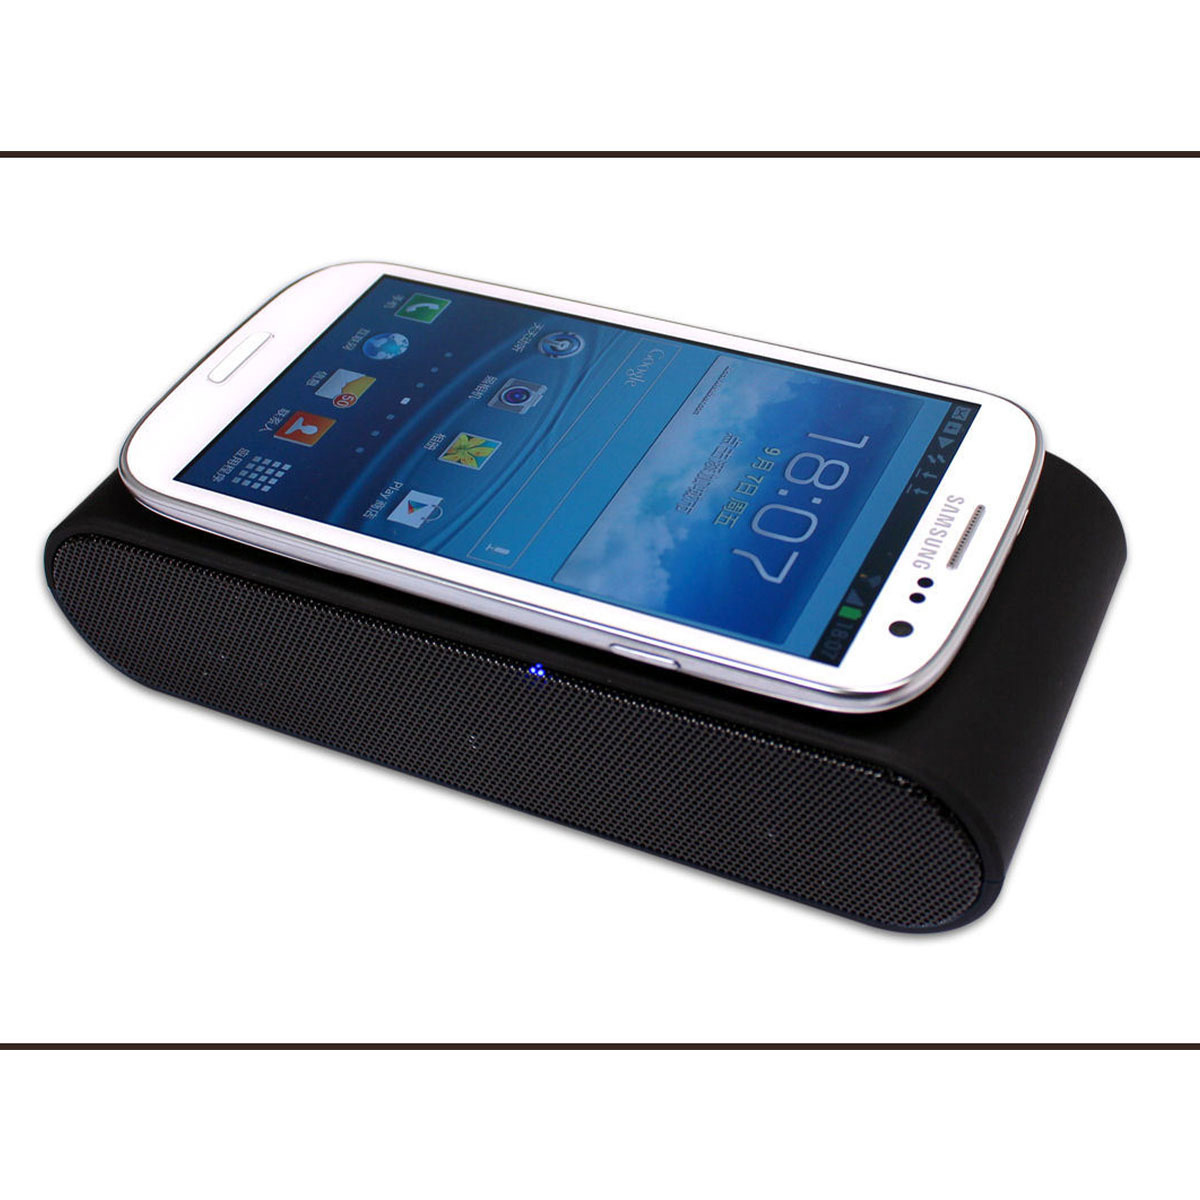 98-1108-01-mobiler-lautsprecher-für-smartphones-touchplay-upbeat-anwendung2-1200x1200px.jpg